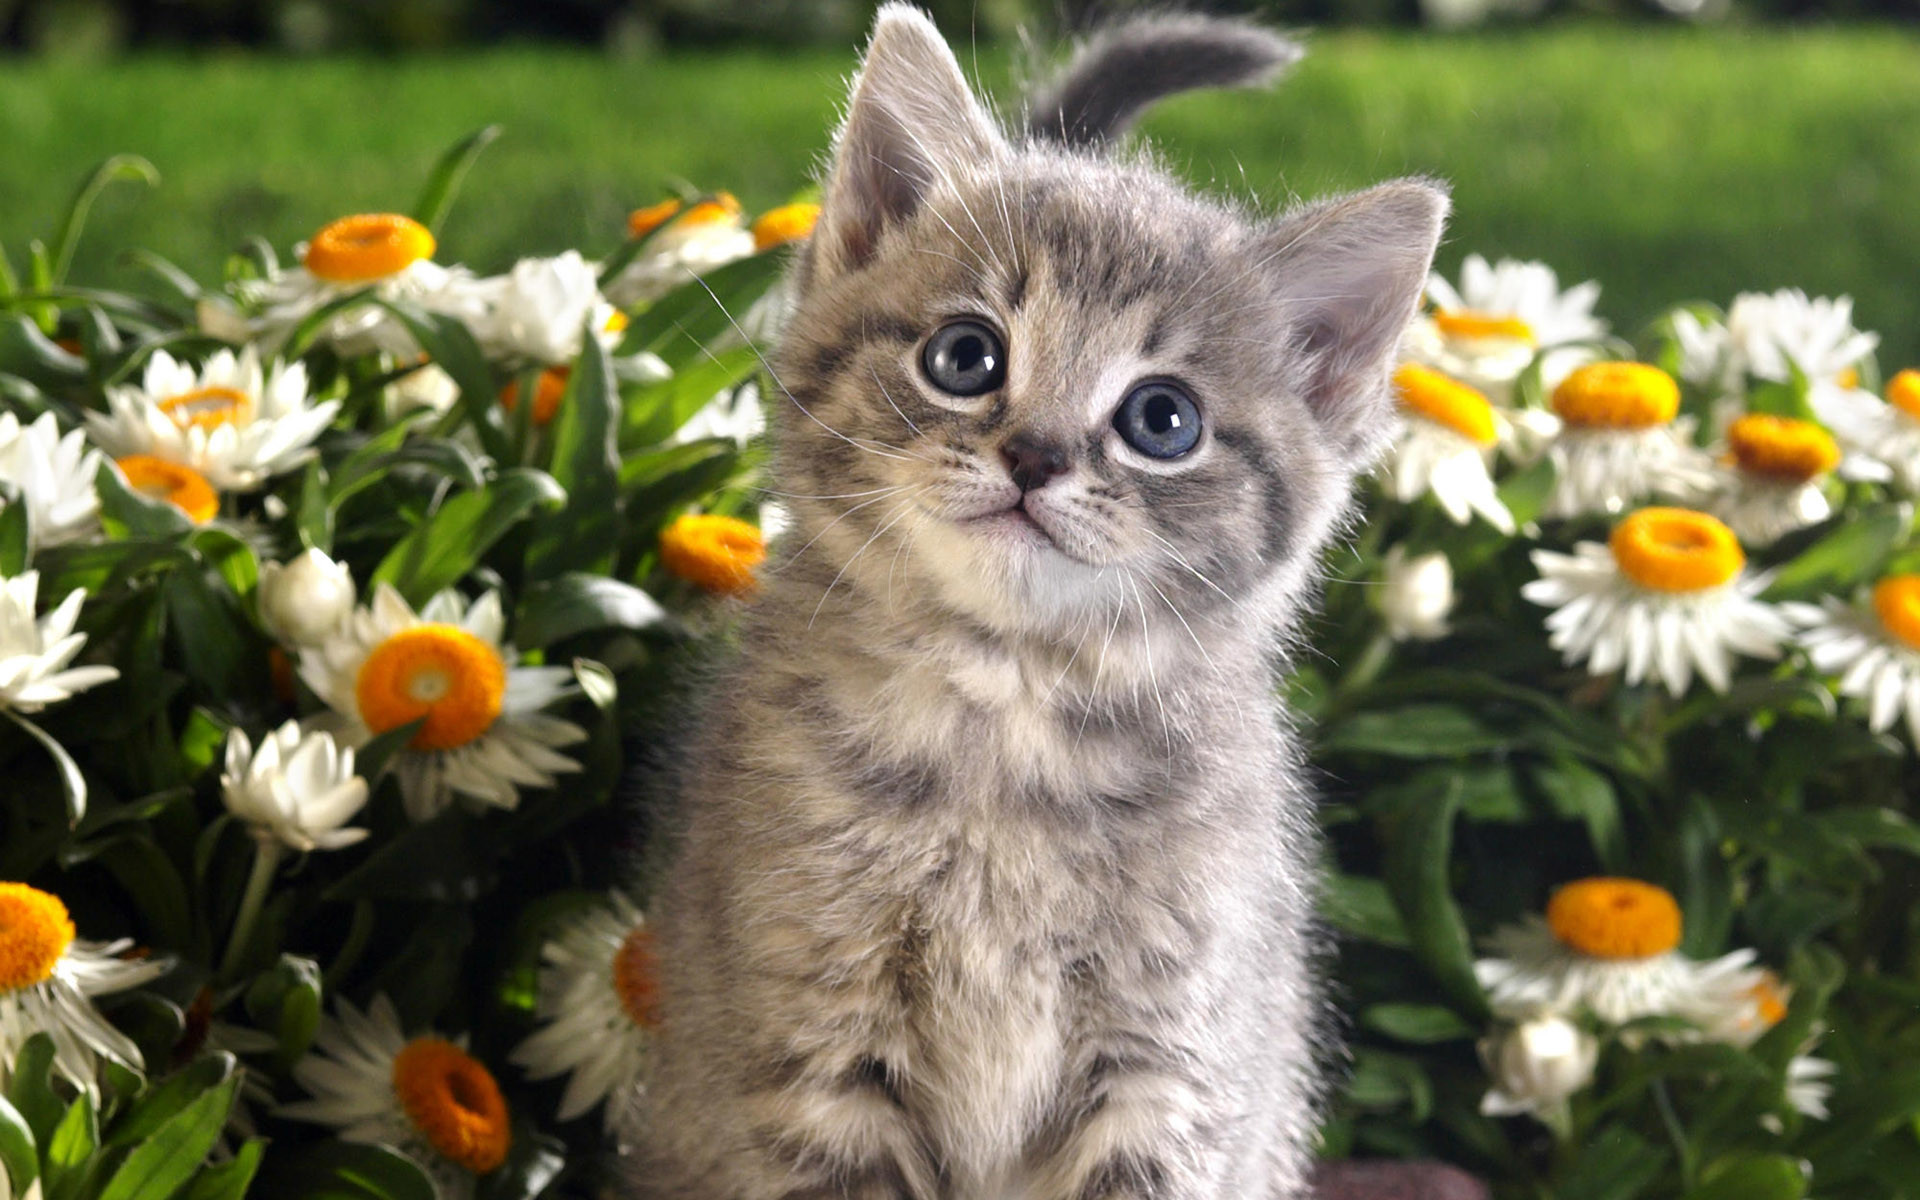 Cute Little Kitten wallpaper wallpaper free download 1280Ã—800 Pictures Of Cute  Kittens Wallpapers (